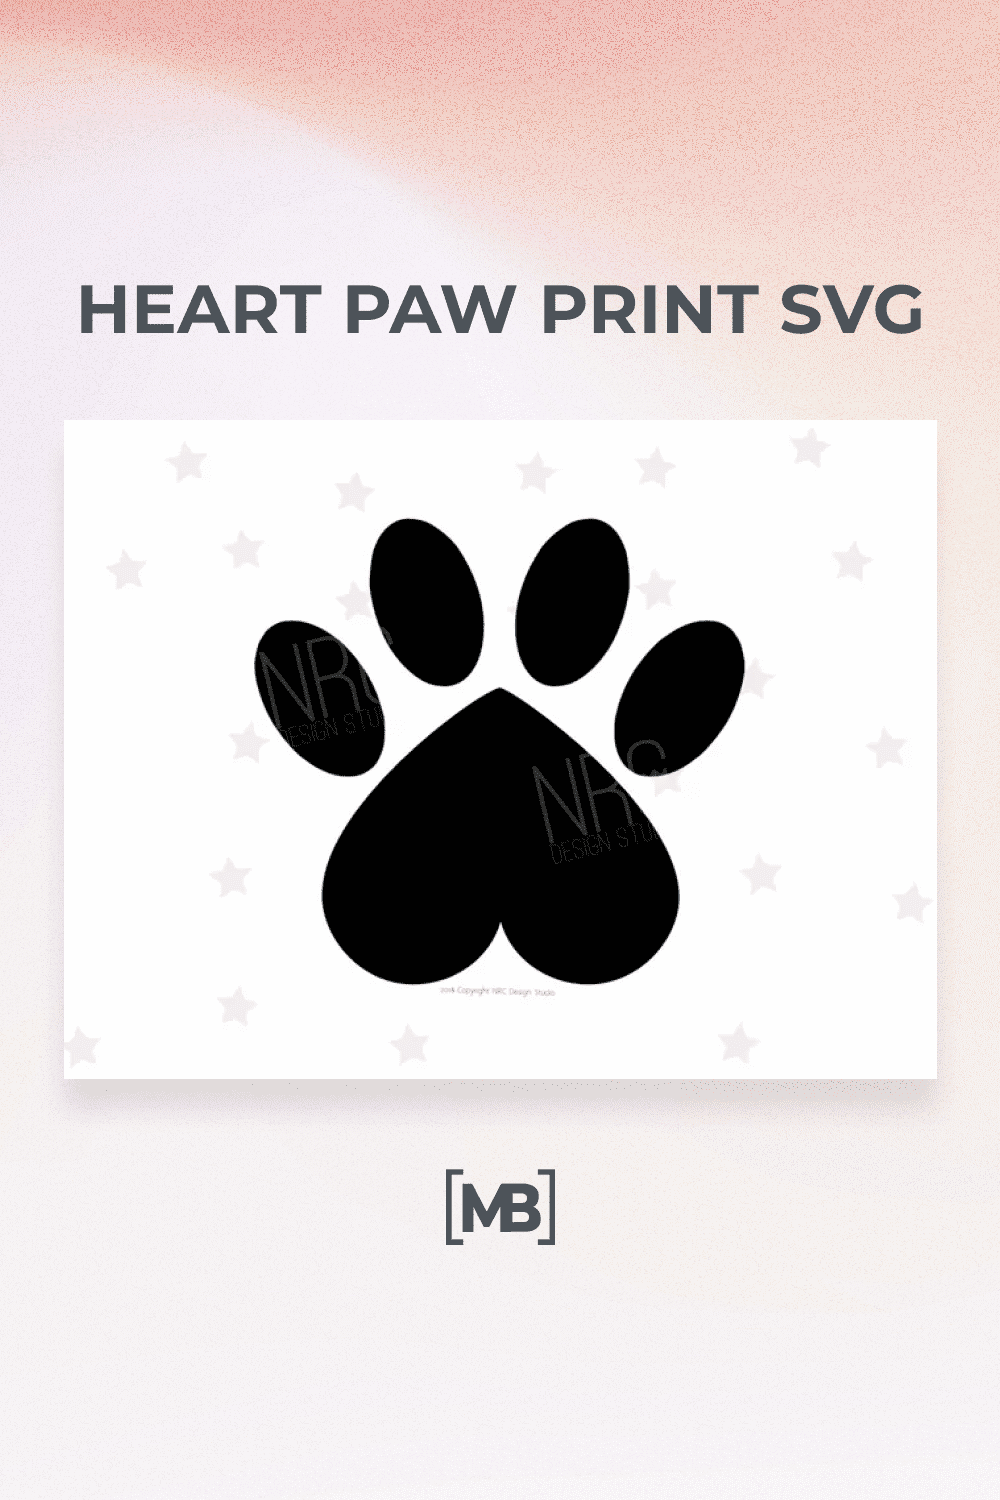 Heart Paw Print SVG.